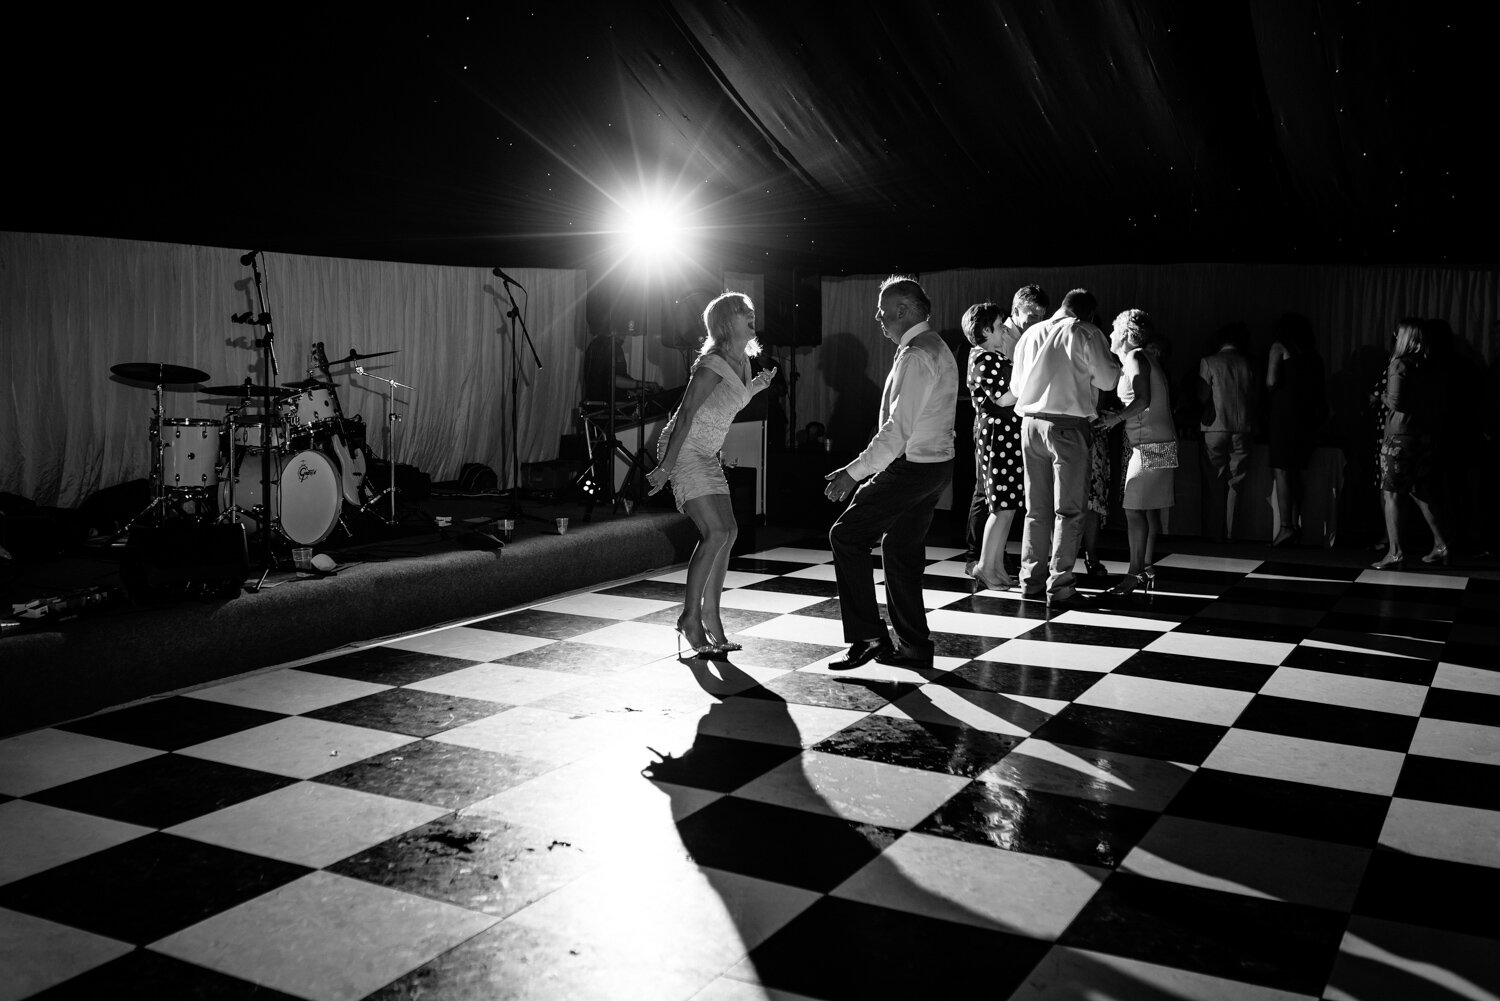 Dancing at wedding party